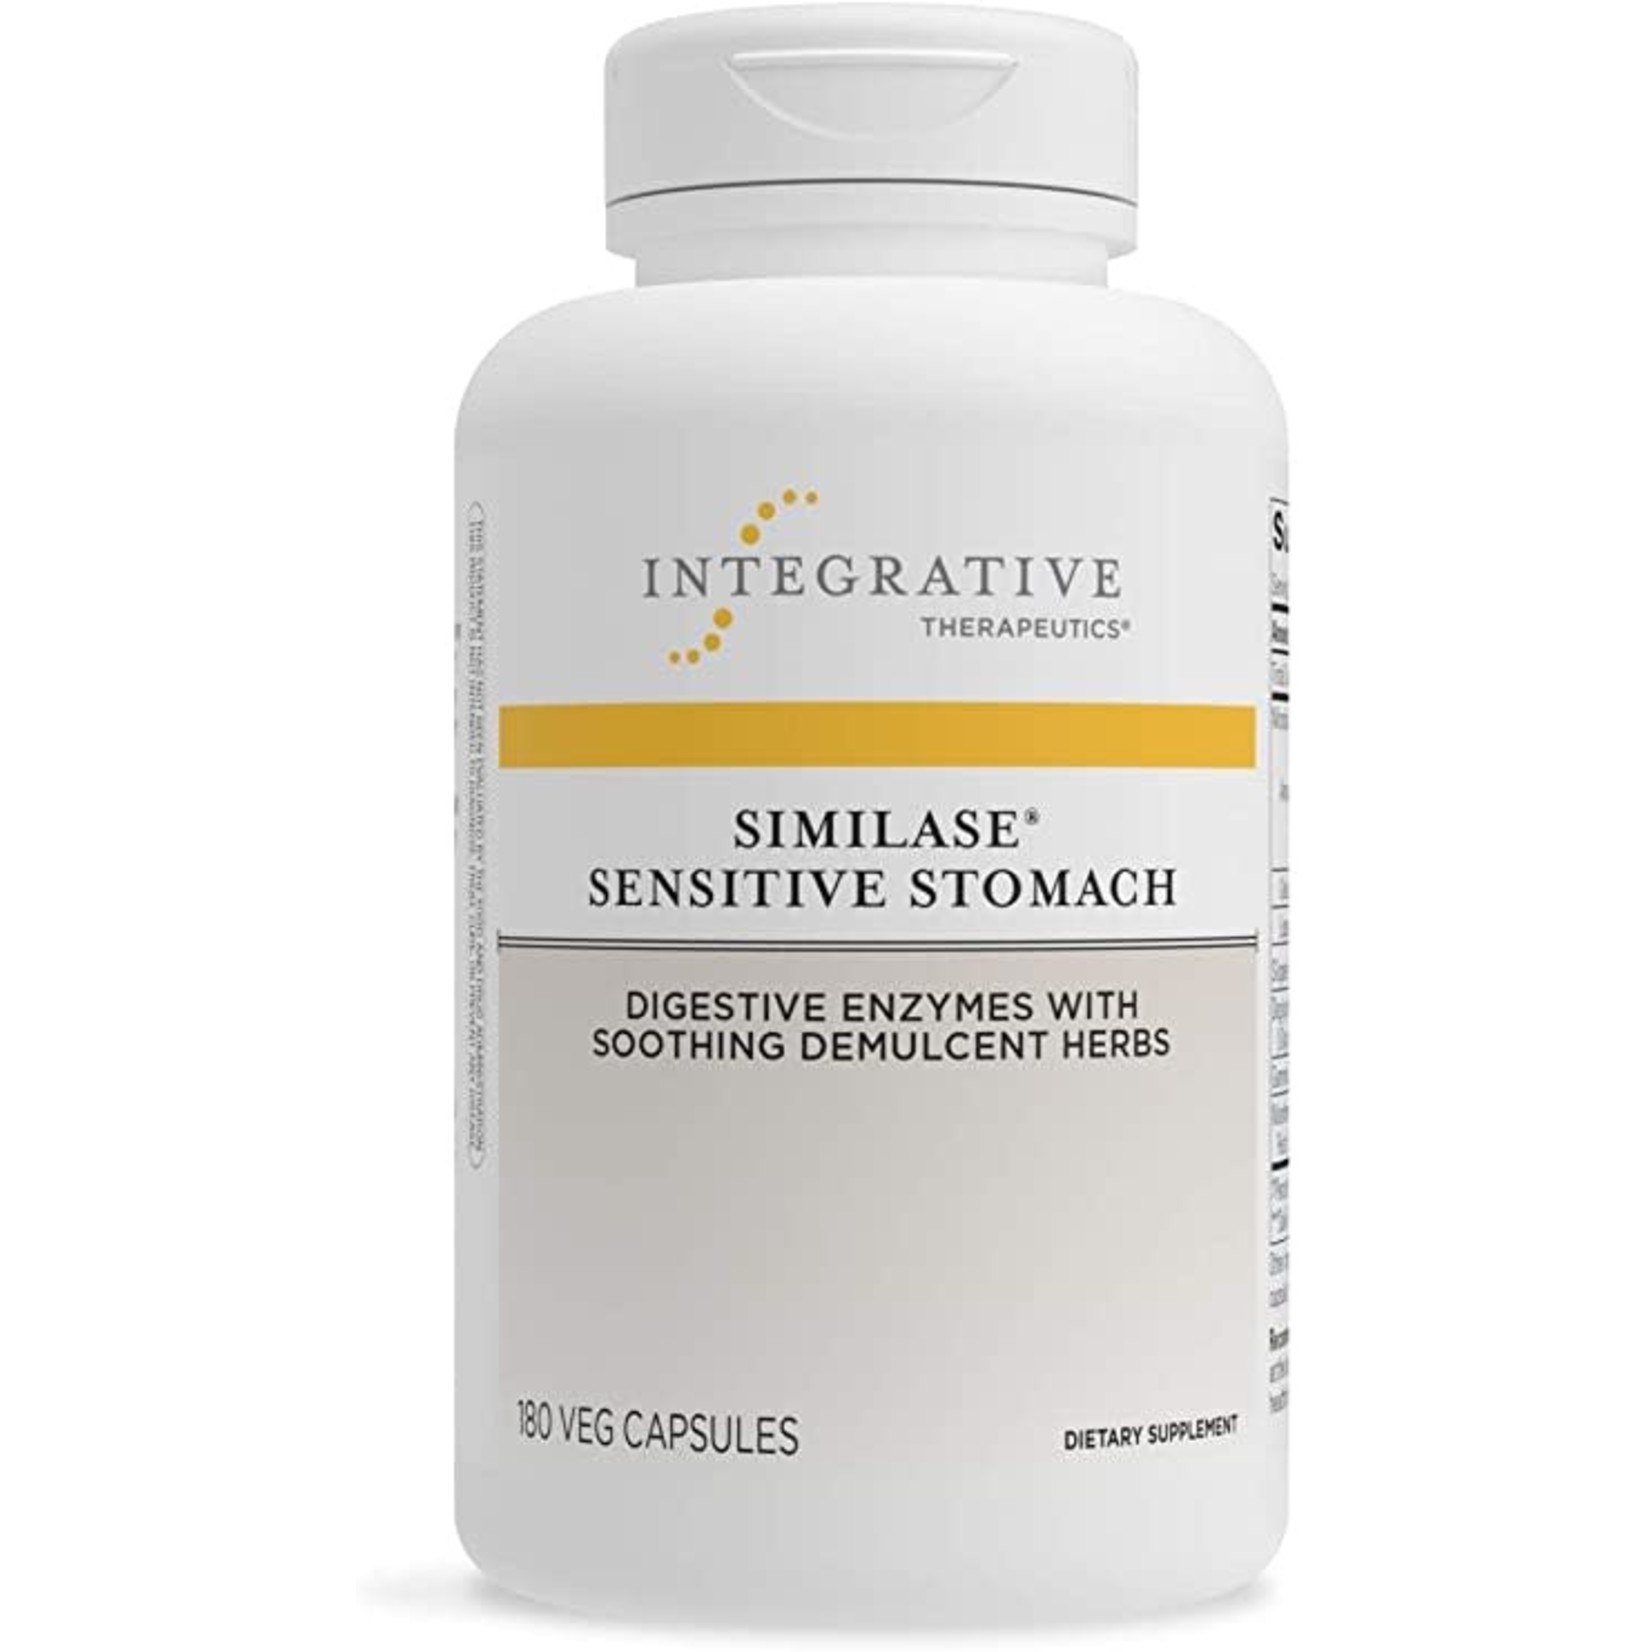 Similase Sensitive Stomach (Integrative Therapeutics)